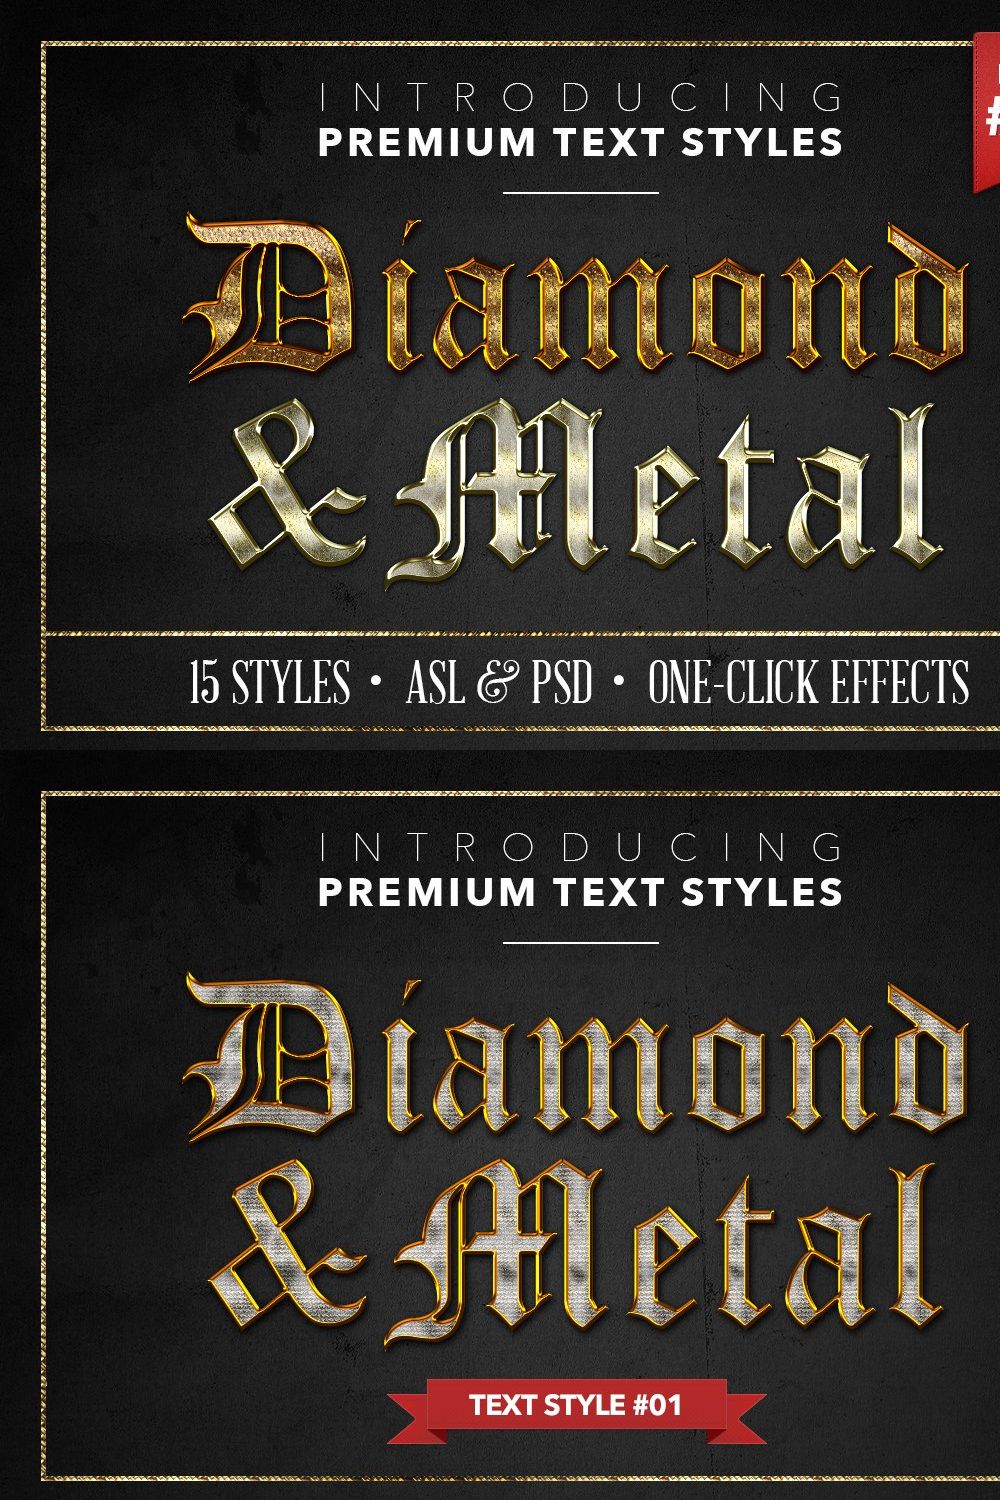 Diamond & Metal #1 - 15 Text Styles pinterest preview image.